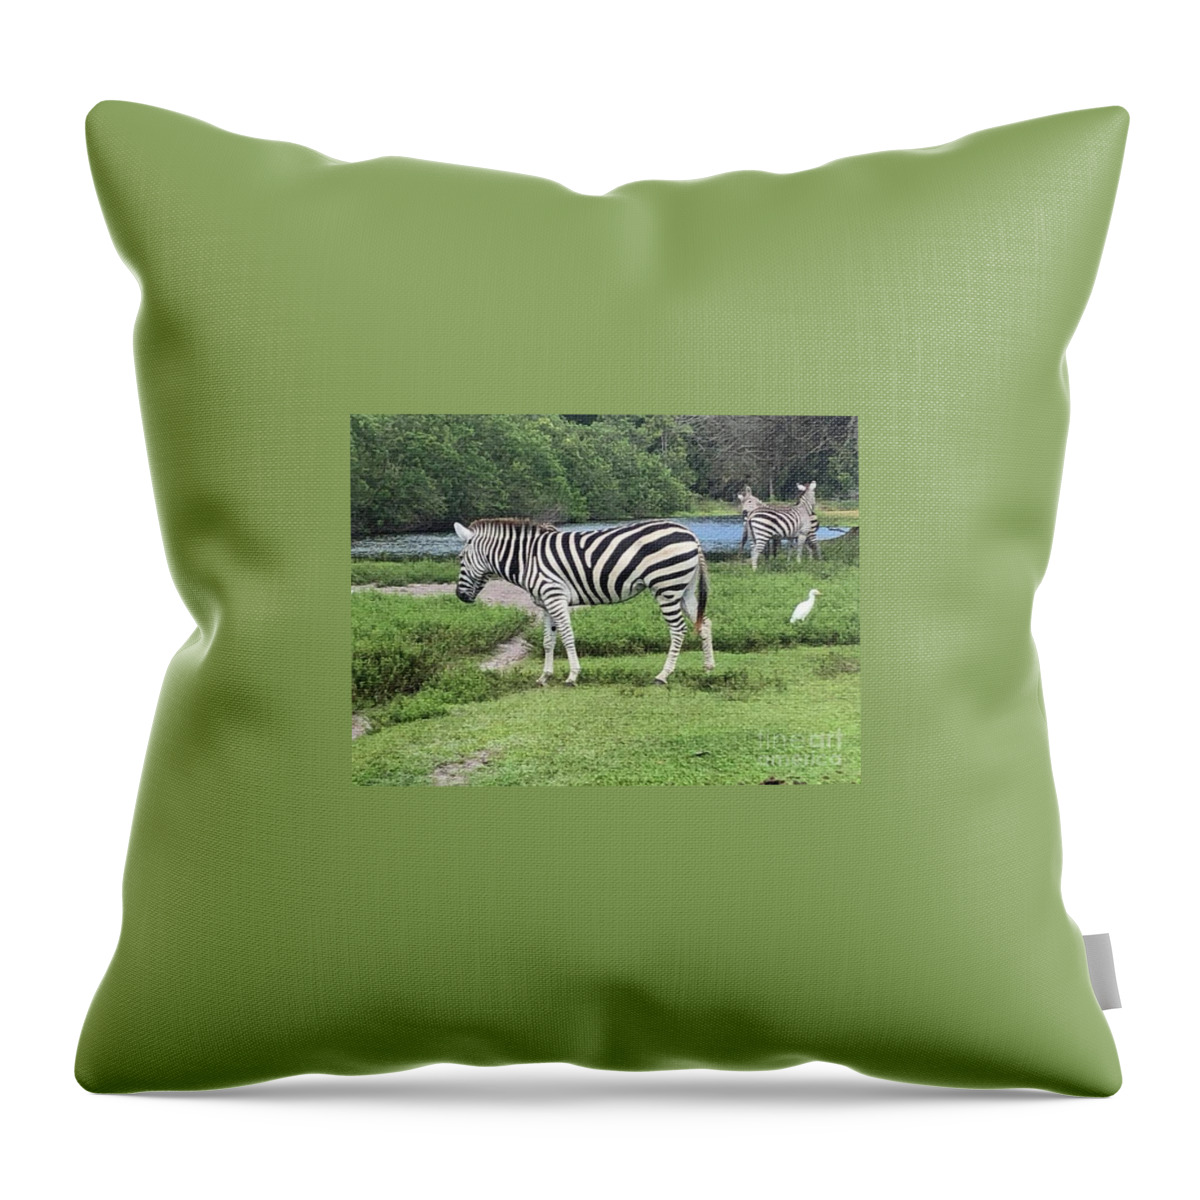 Zebras With Egret Grazing Throw Pillow featuring the photograph Zebras With Egret Grazing by John Telfer